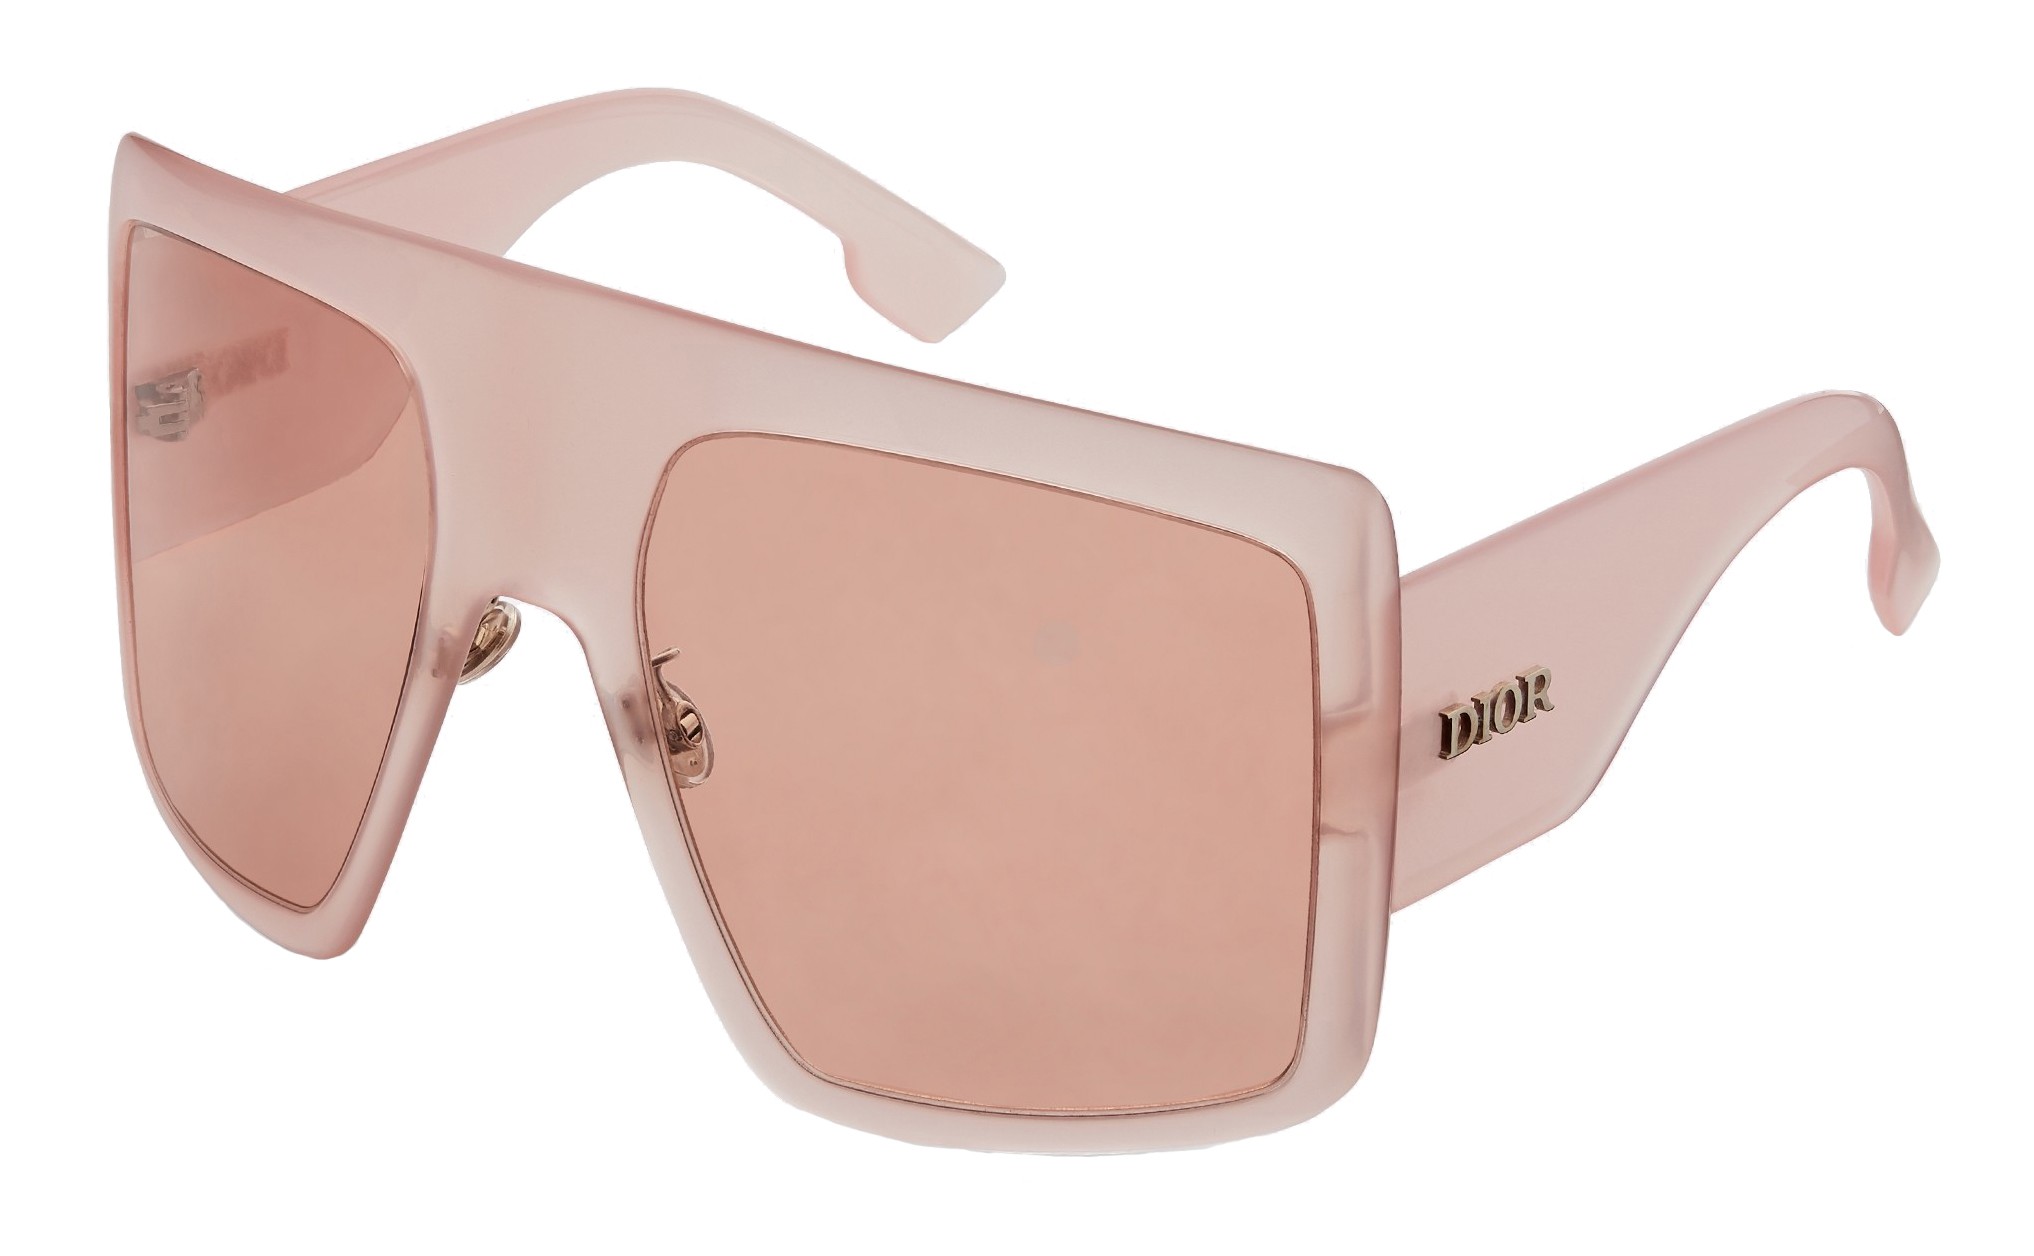 diorsolight1 sunglasses